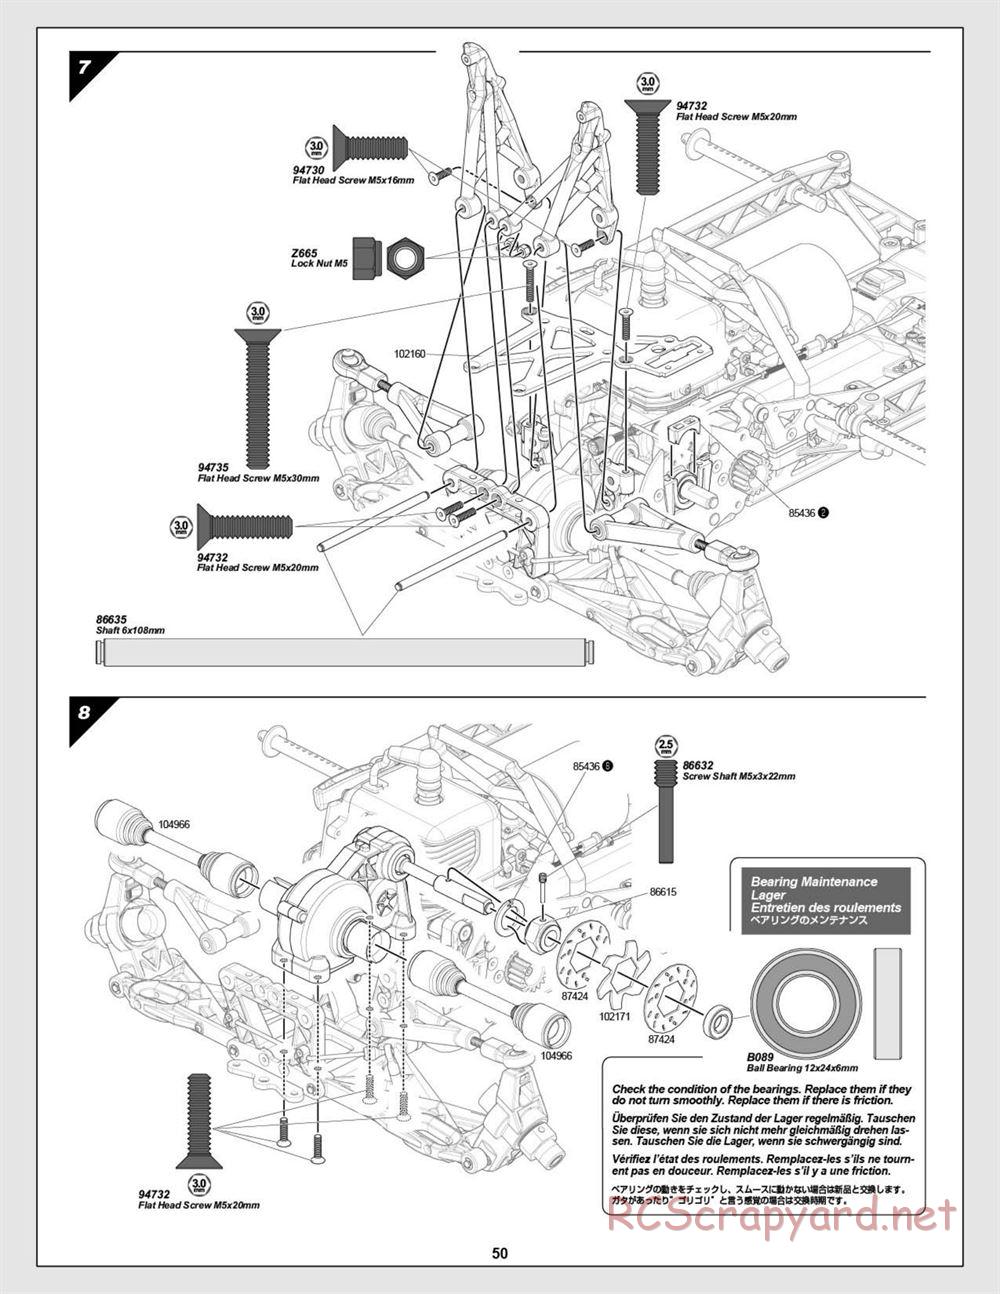 HPI - Baja 5R - Manual - Page 50